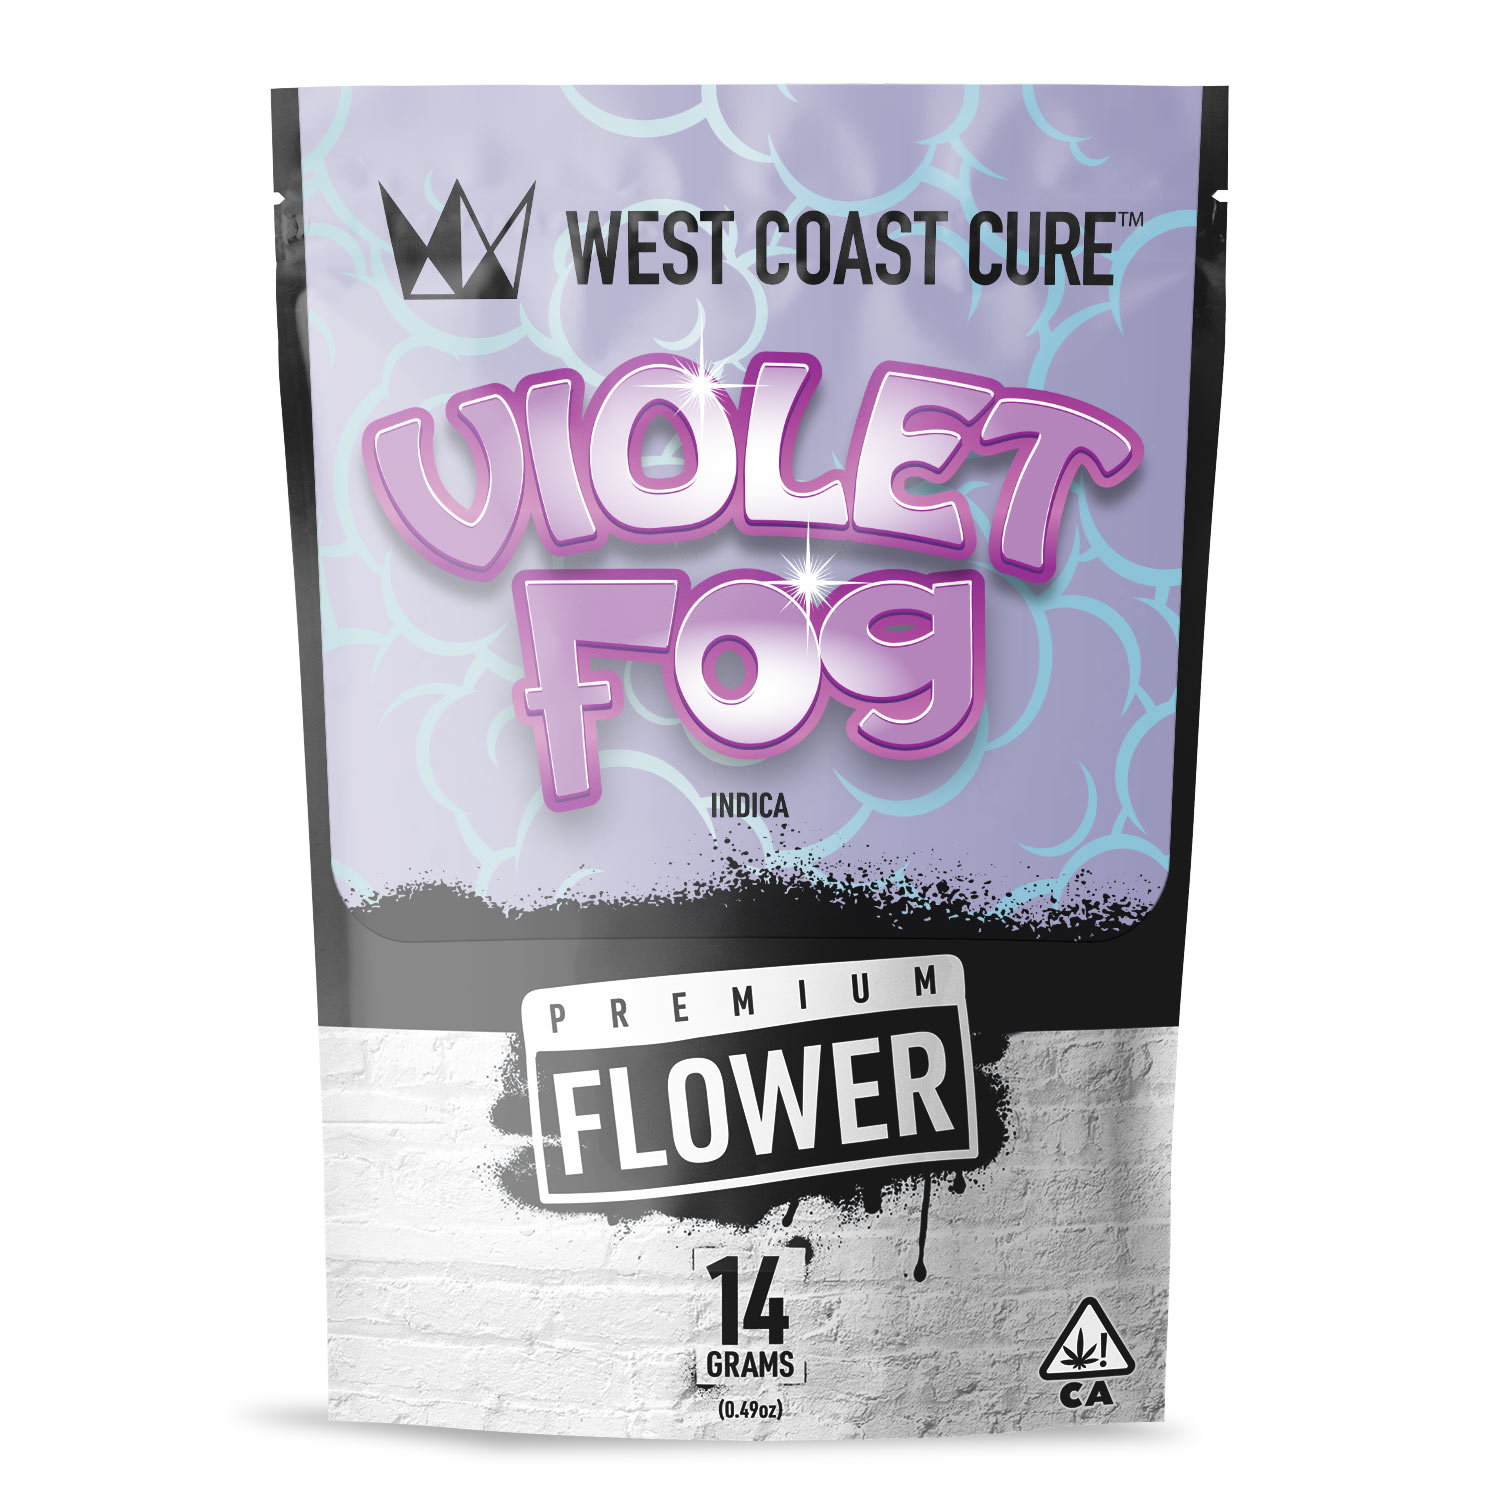 Violet Fog premium cannabis flower